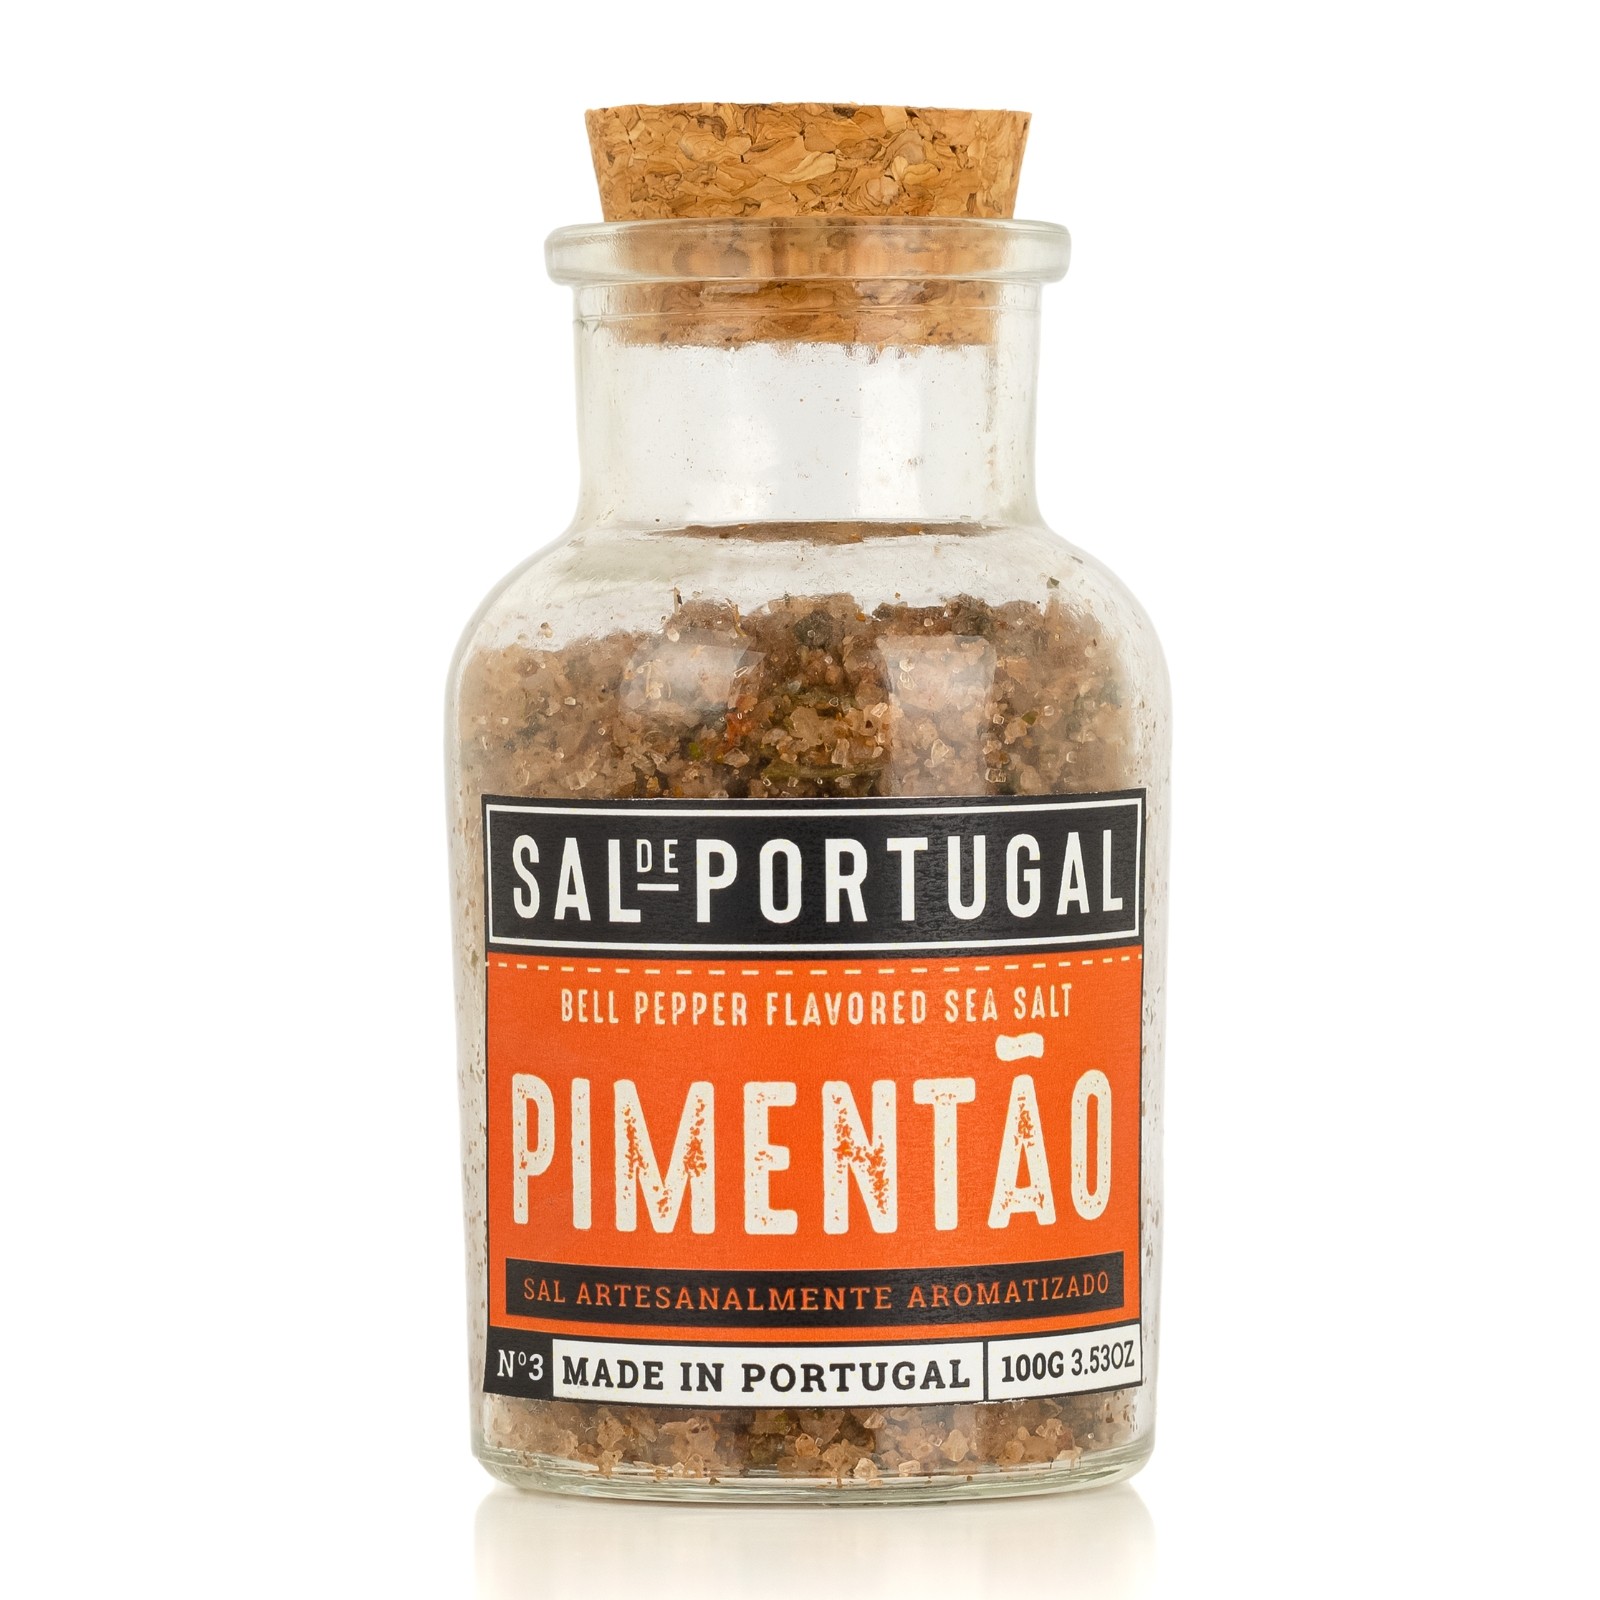 Sal de Portugal Bell Pepper Flavored Sea Salt